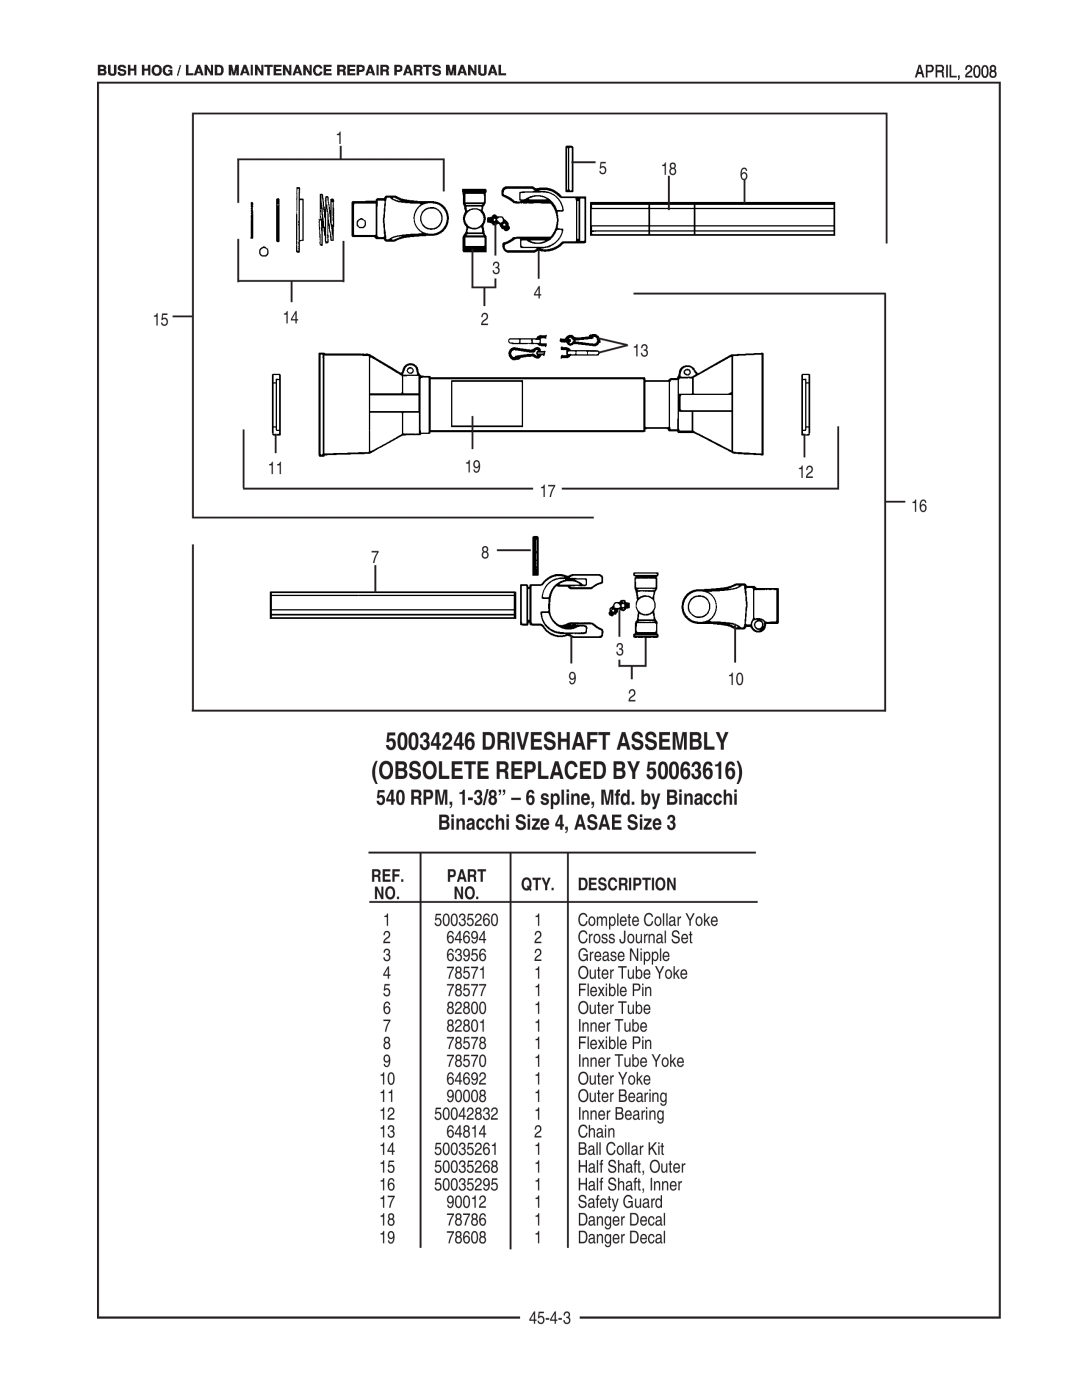 Bush Hog FTH 480 Driveshaft Assembly, Obsolete Replaced By, Description, 540 RPM, 1-3/8” - 6 spline, Mfd. by Binacchi 